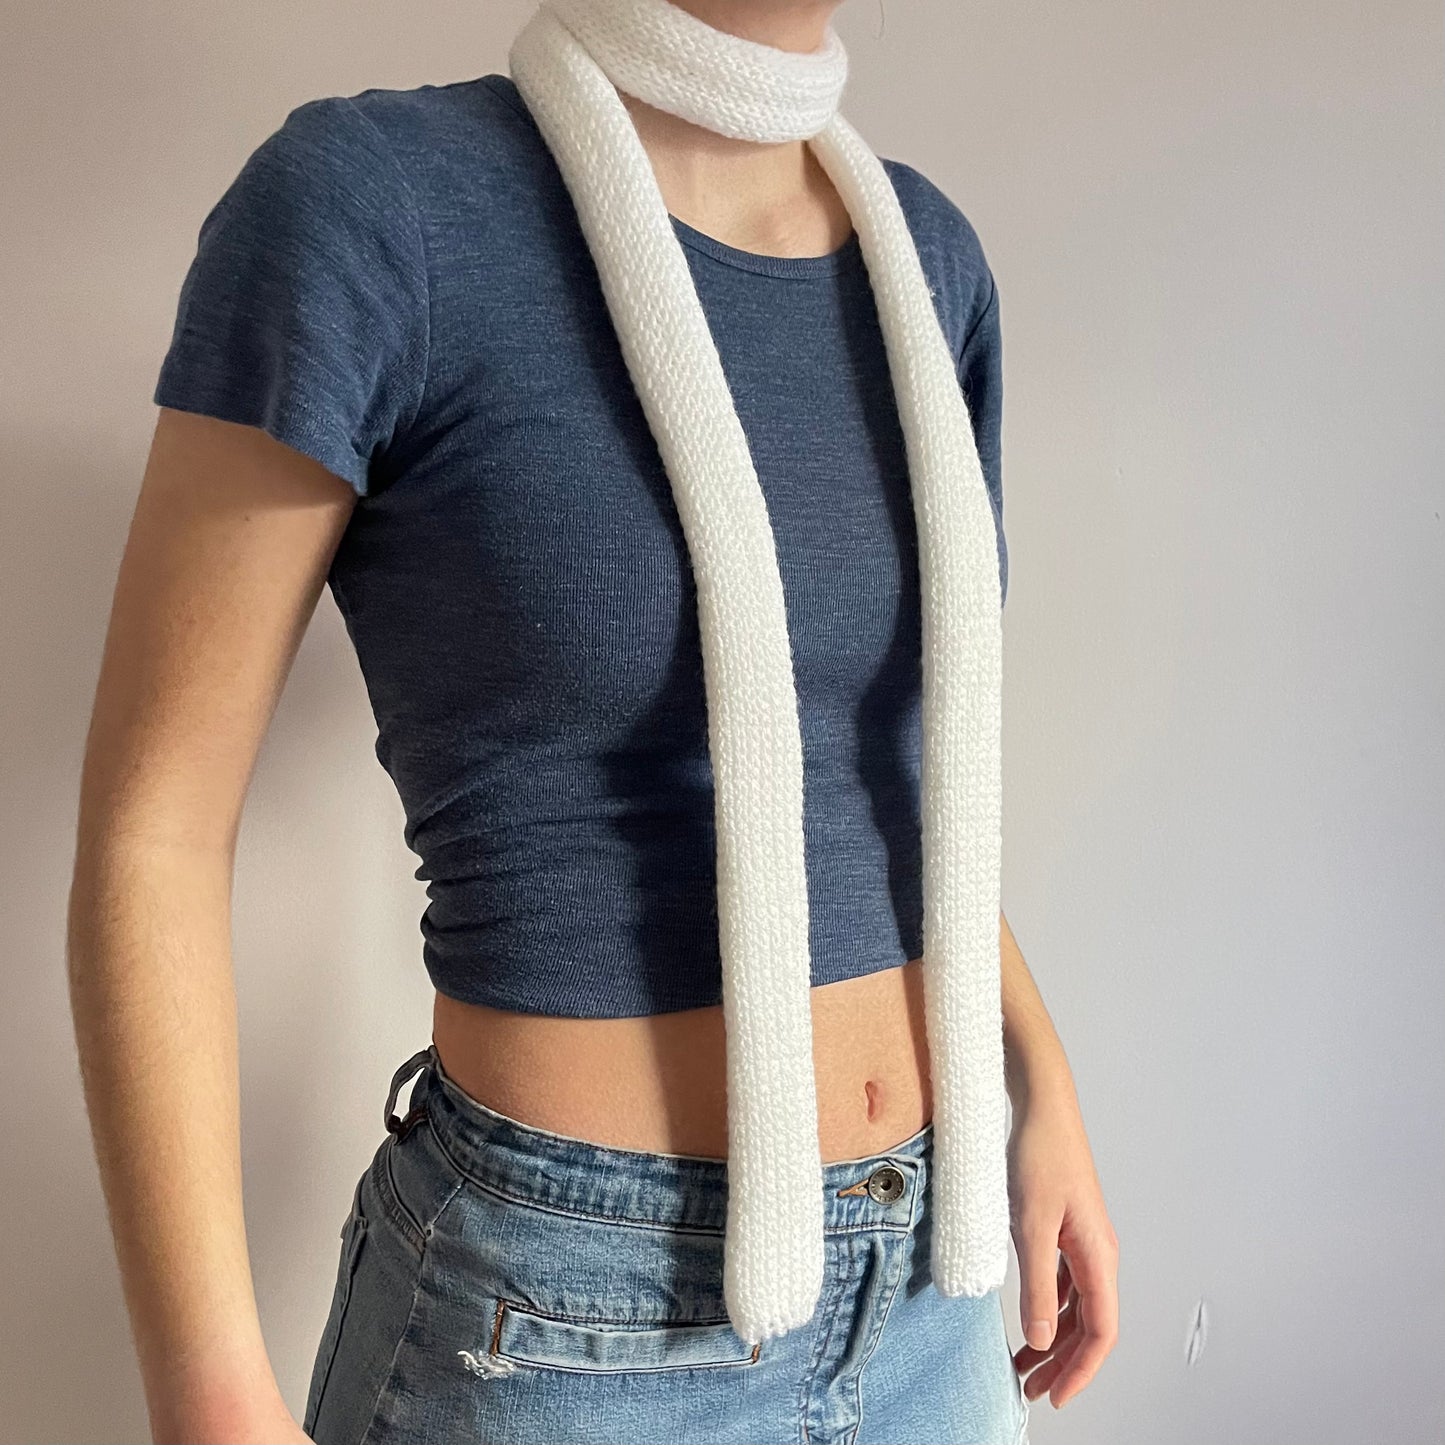 Handmade knitted skinny scarf in white